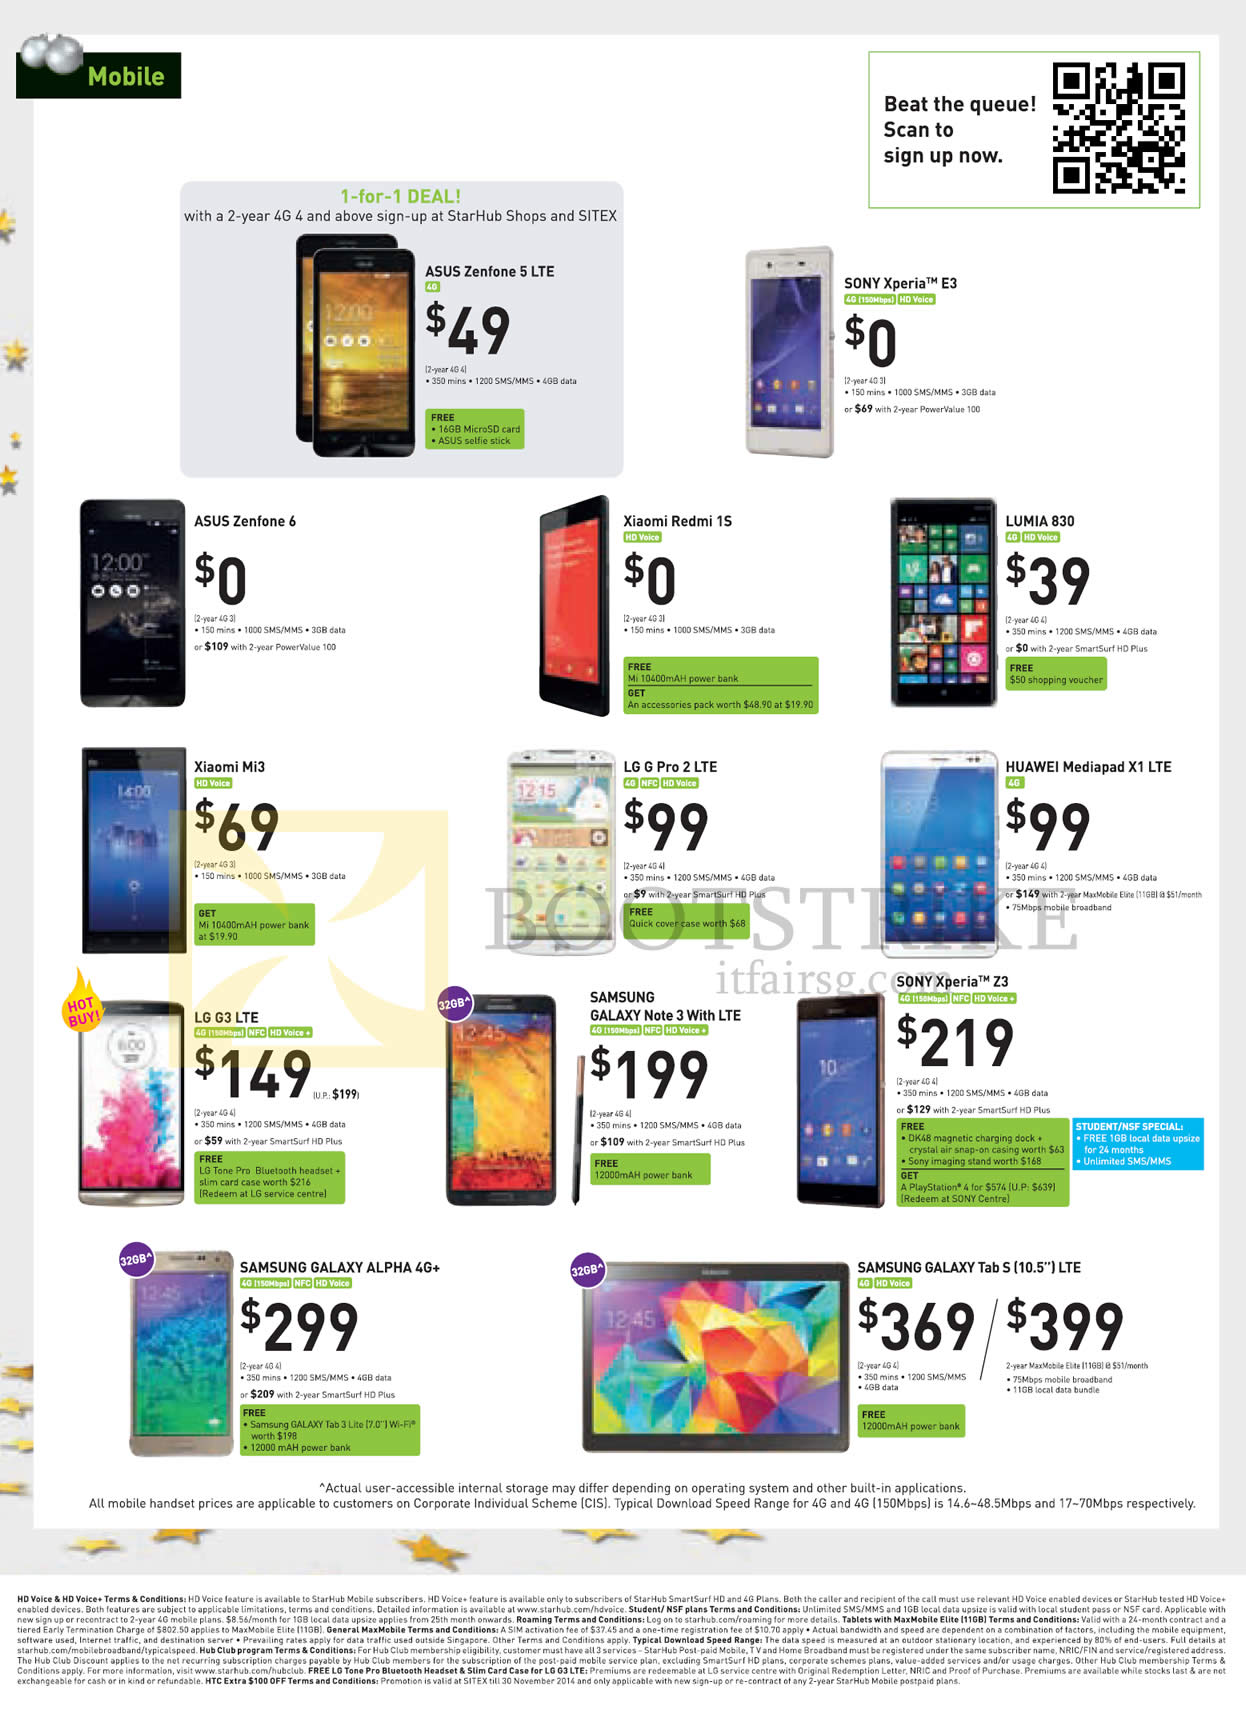 SITEX 2014 price list image brochure of Starhub Mobile ASUS Zenfone 5, 6, Sony Xperia E3 Z3, Xiaomi Redmi 1S Mi3, Lumia 830, LG G Pro 2 G3, Huawei Mediapad X1, Samsung Galaxy Note 3, Alpha 4G, Tab S 10.5